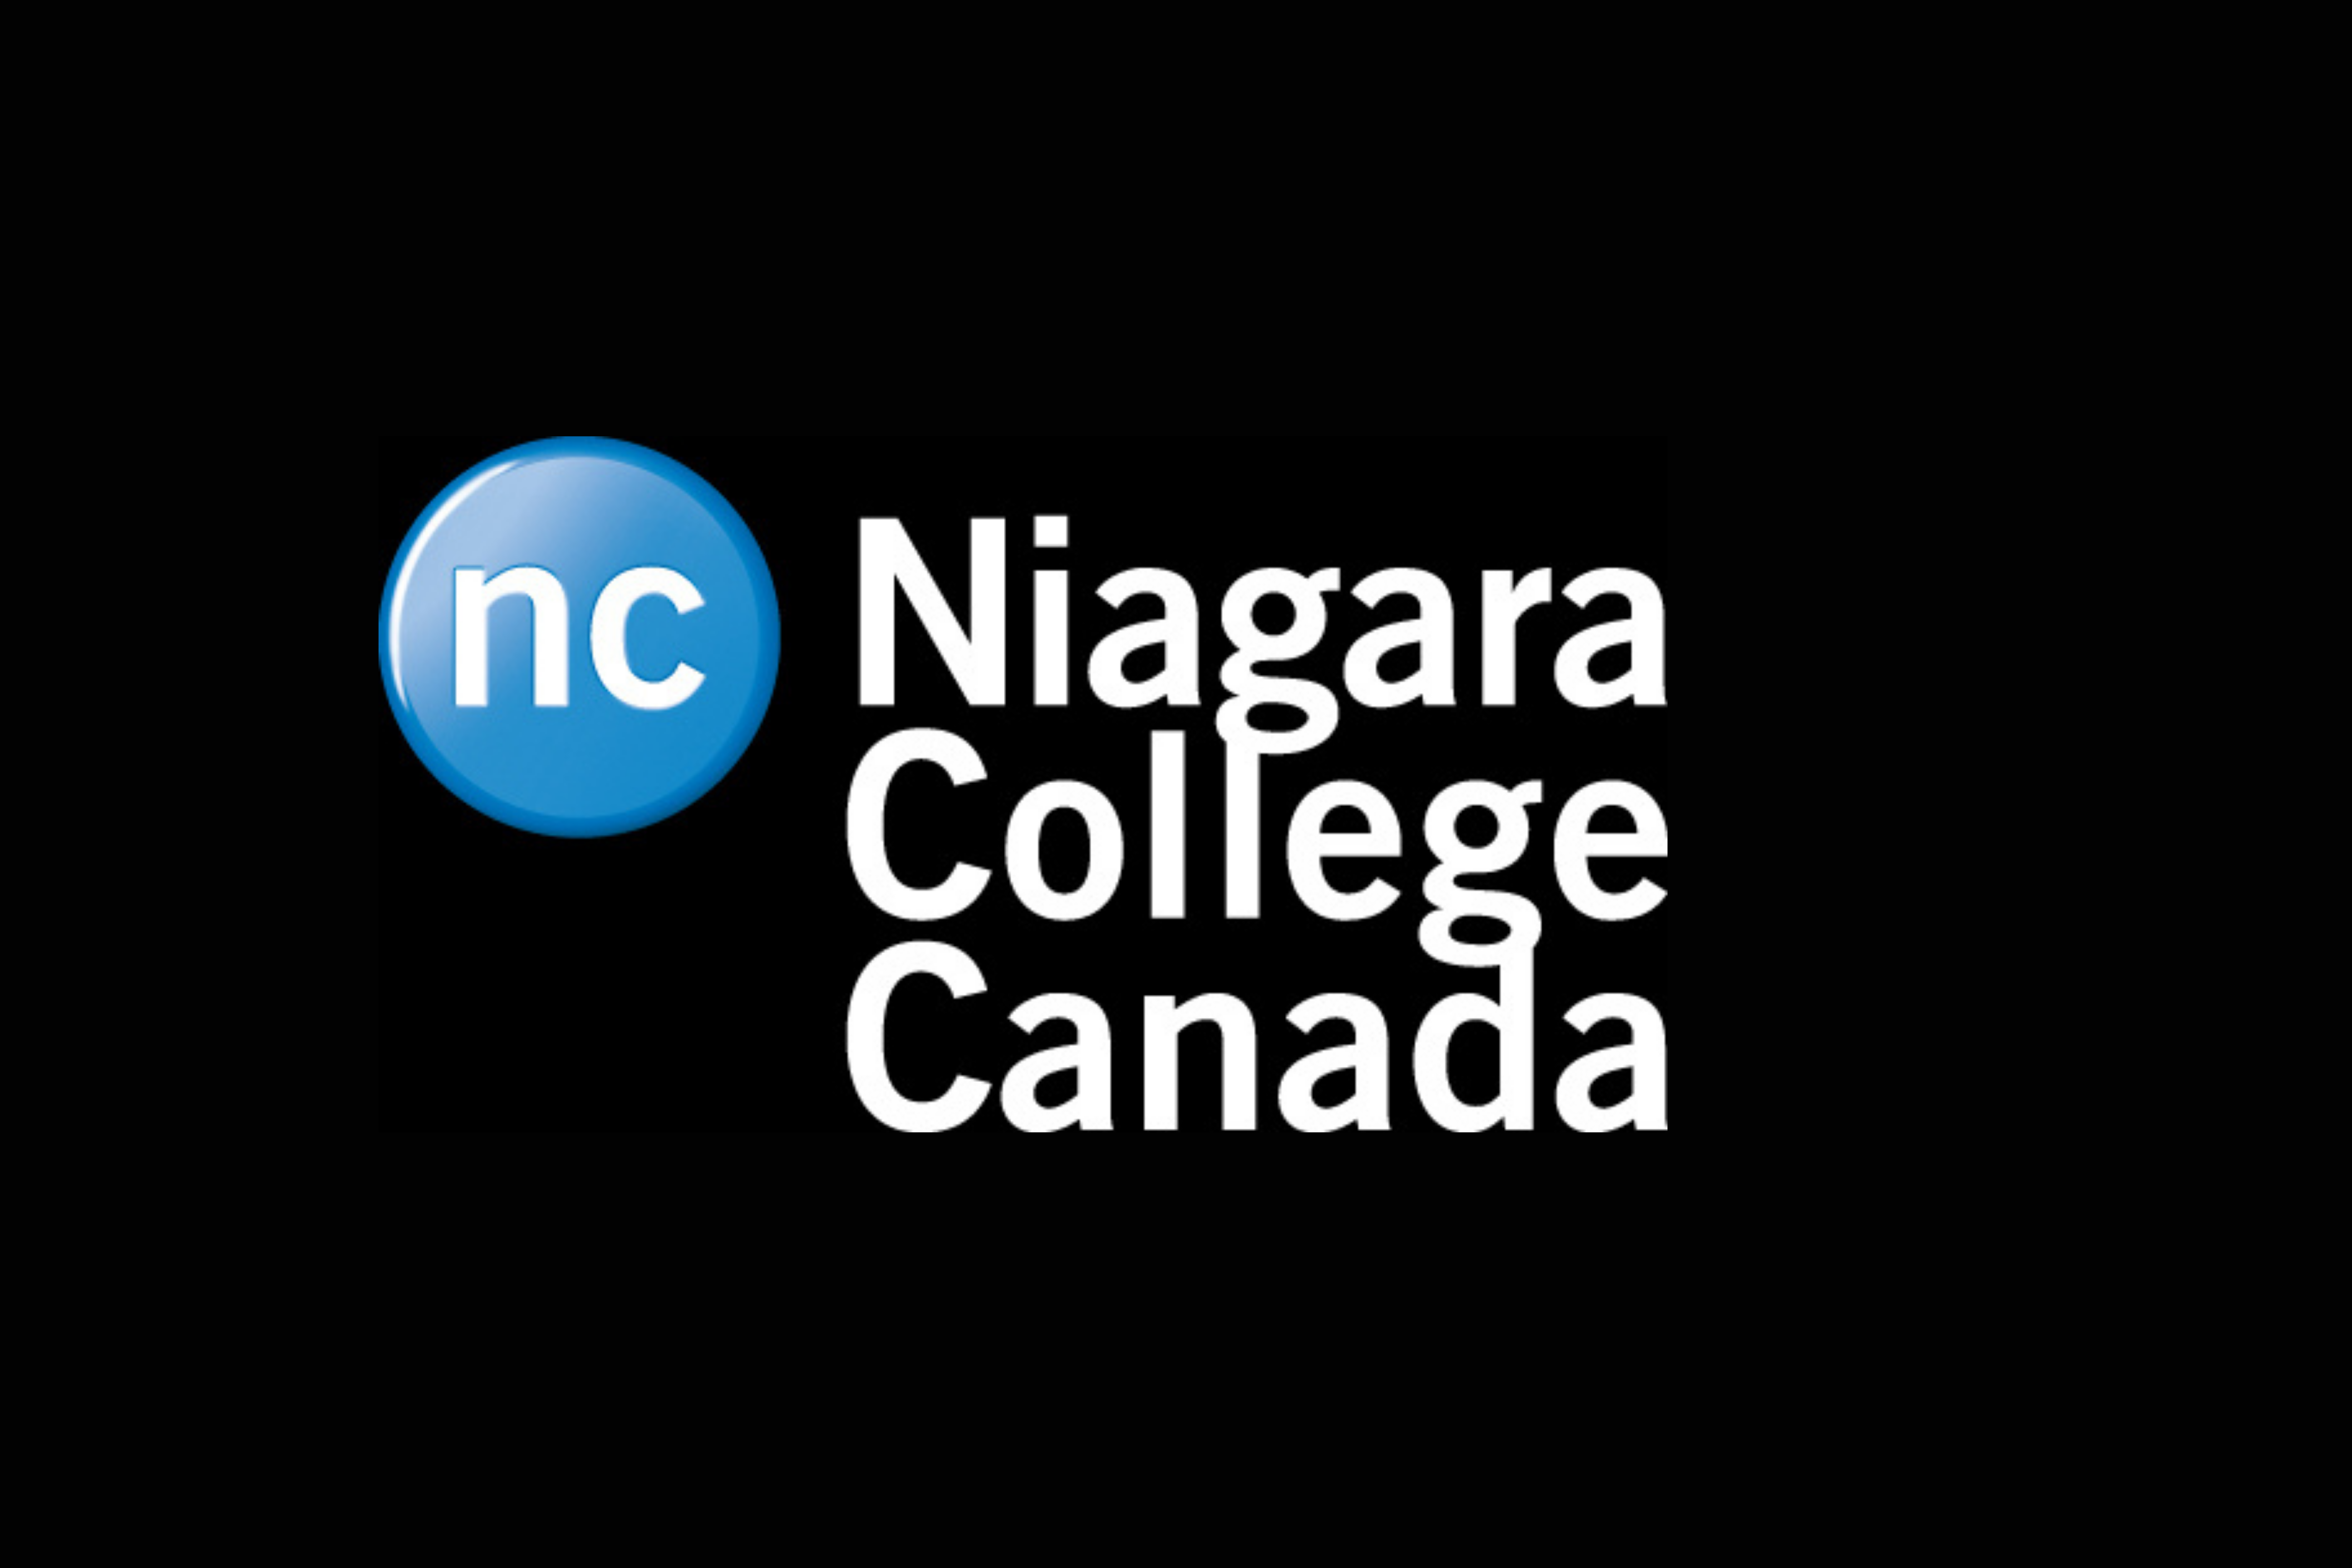 Niagara College Canada logo on black background